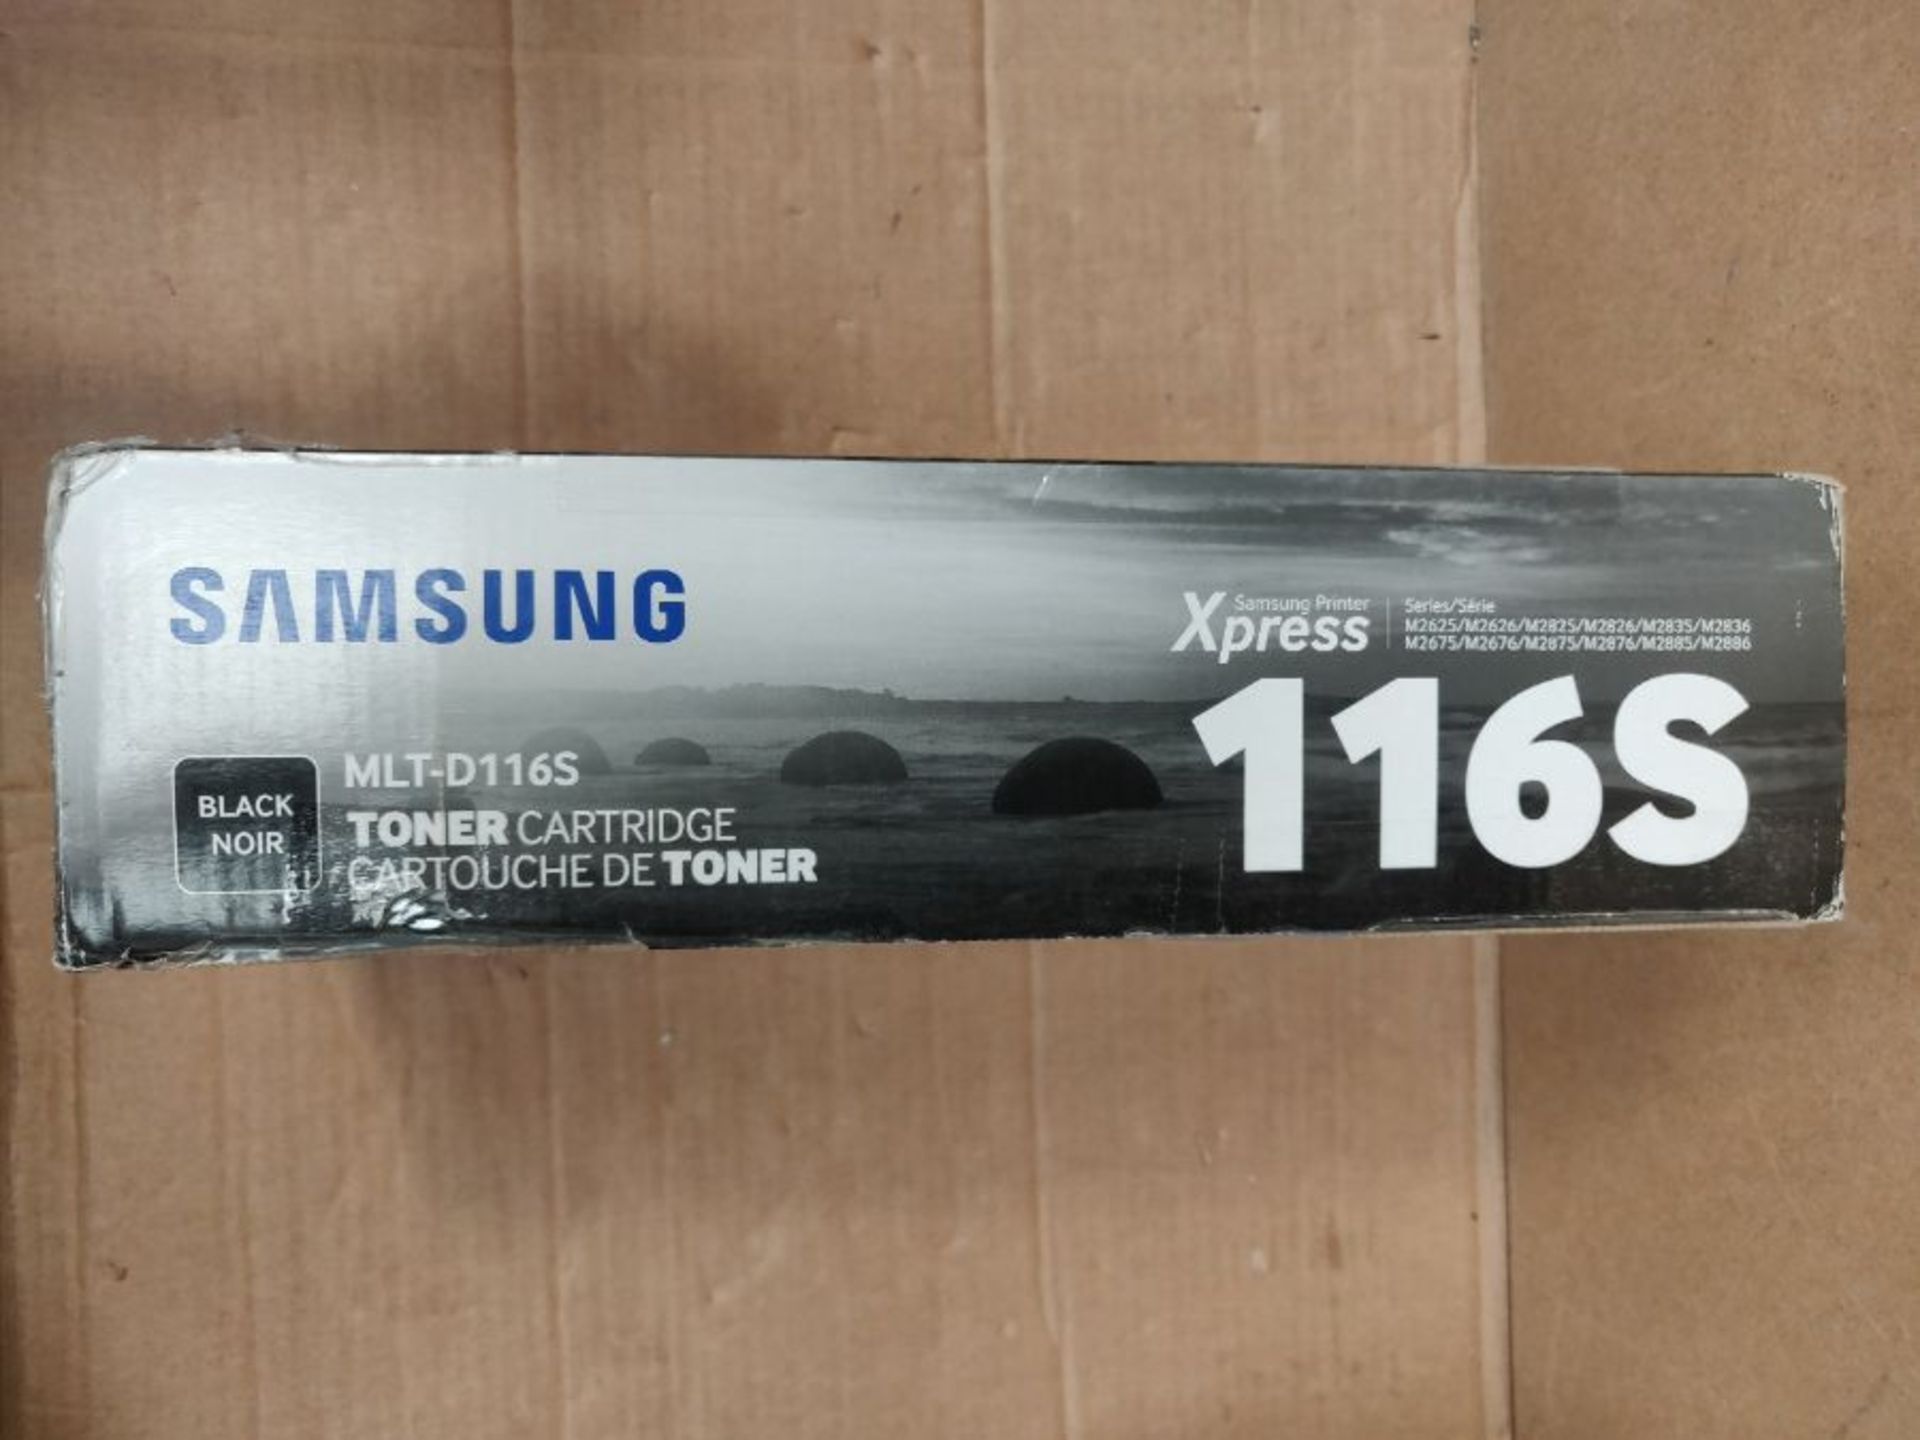 Samsung SU840A MLT-D116S Toner Cartridge, Black, Pack of 1 - Image 2 of 3